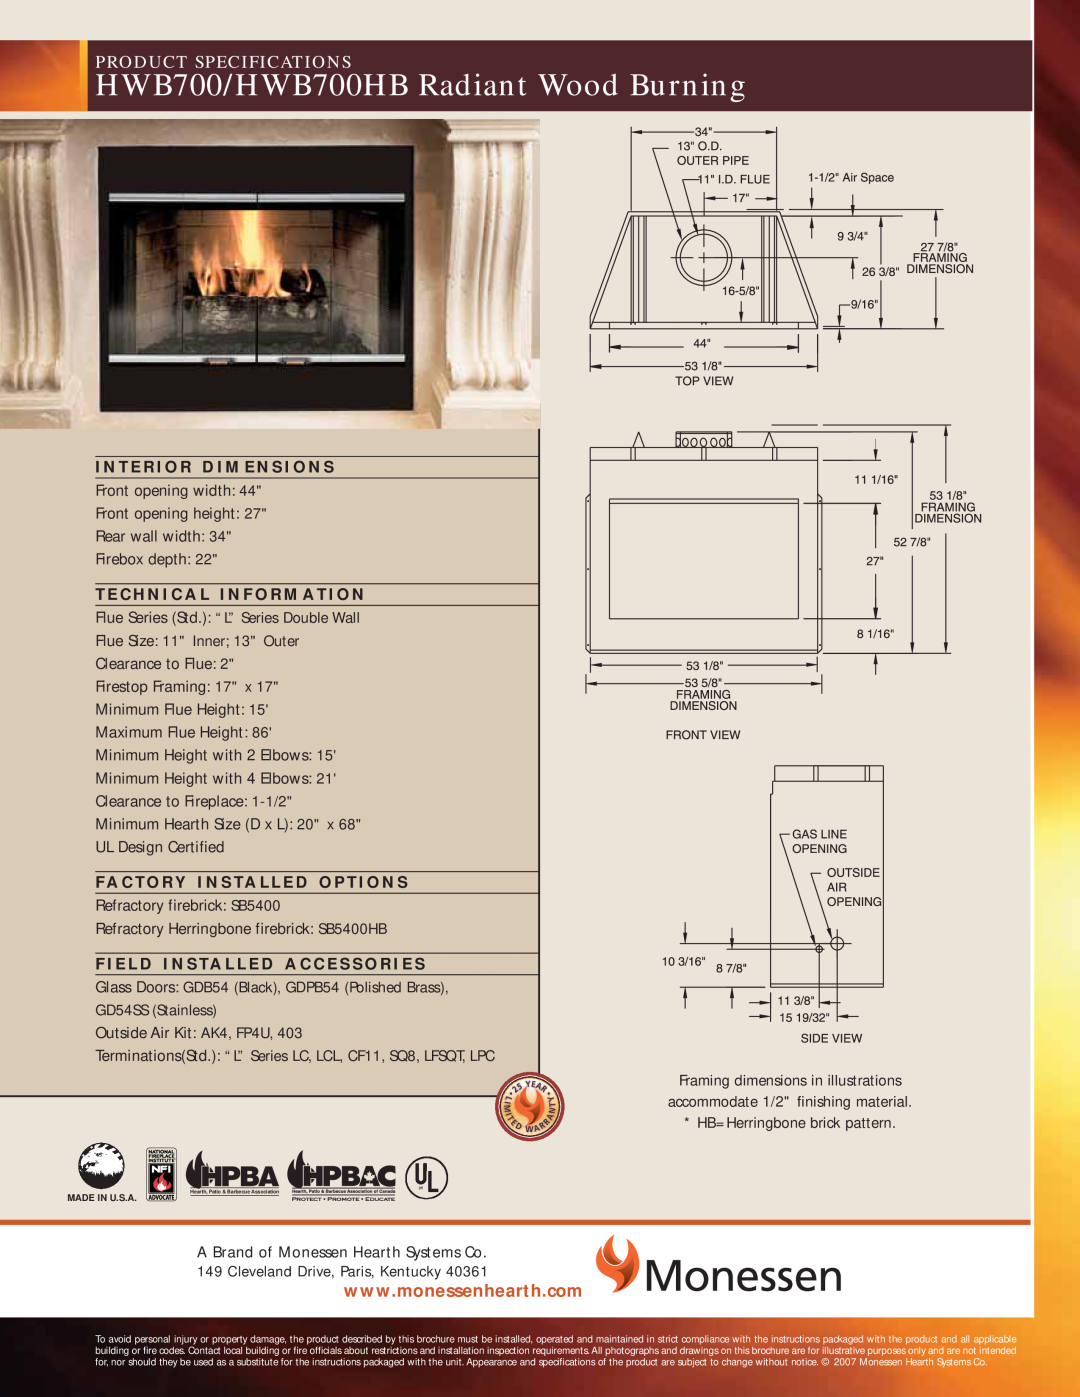 Monessen Hearth brochure HWB700/HWB700HB Radiant Wood Burning, Product Specifications 